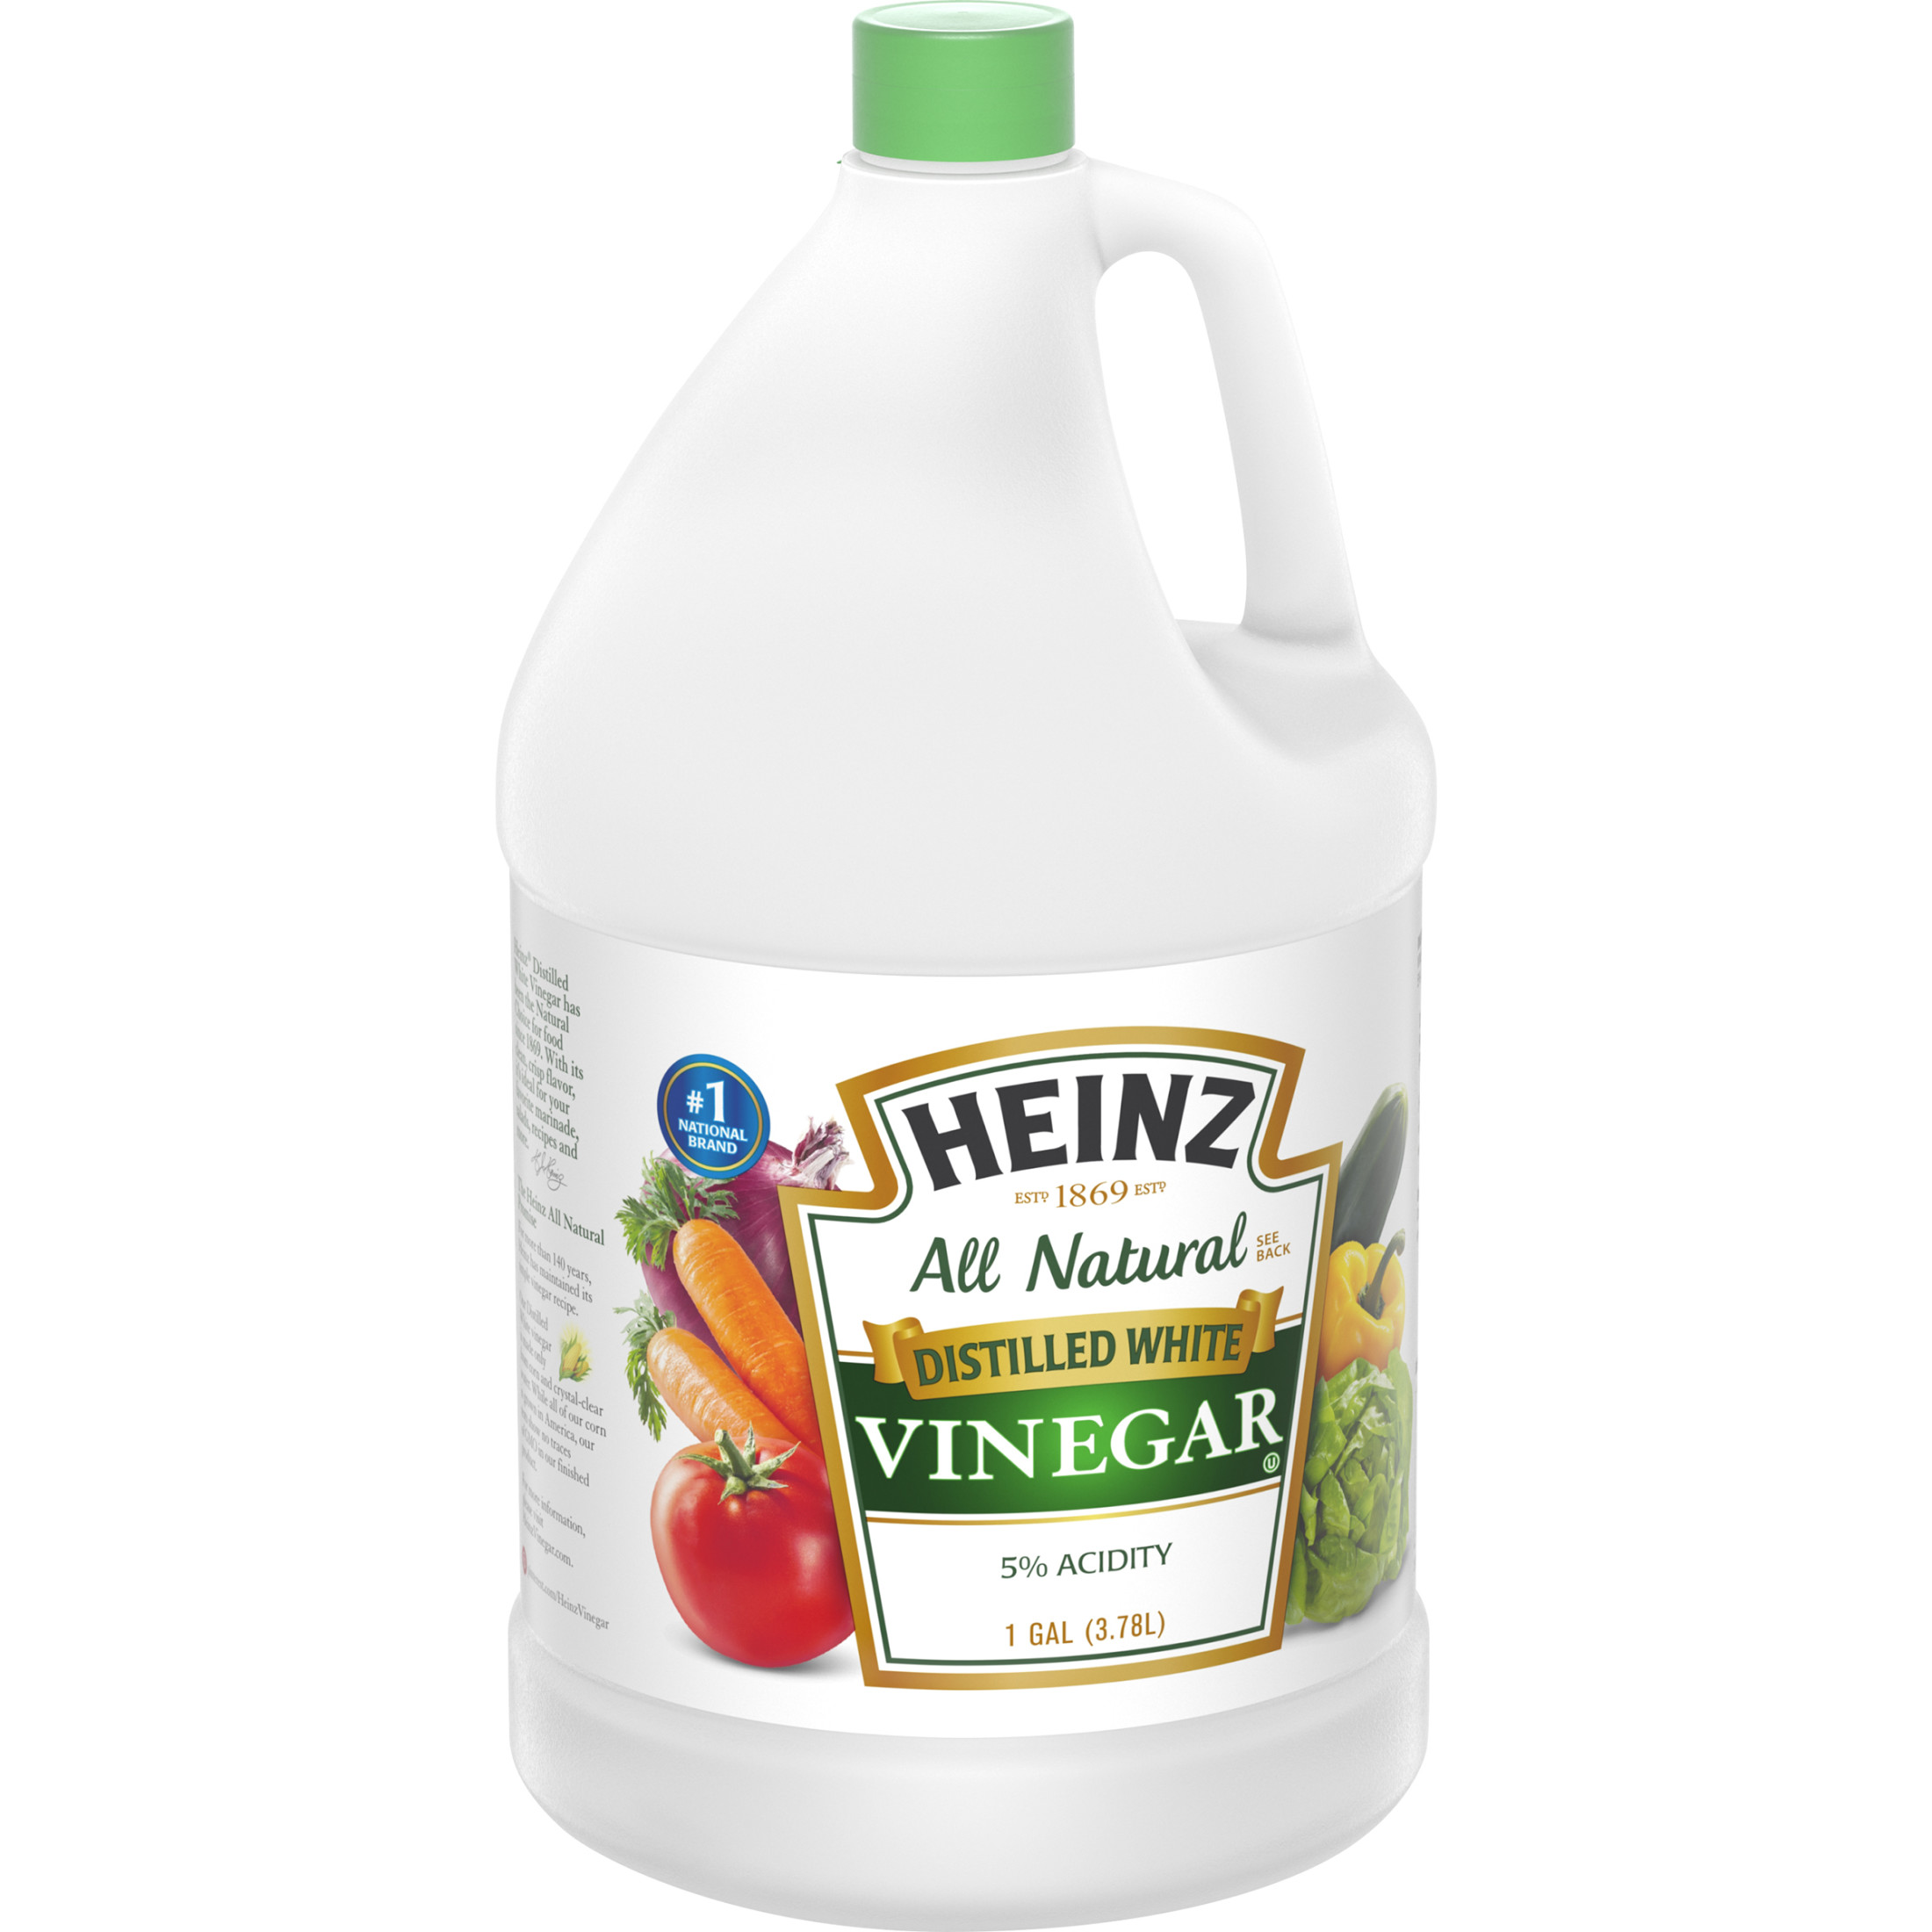 Heinz All Natural Distilled White Vinegar 5% Acidity, 1 gal Jug - image 3 of 6